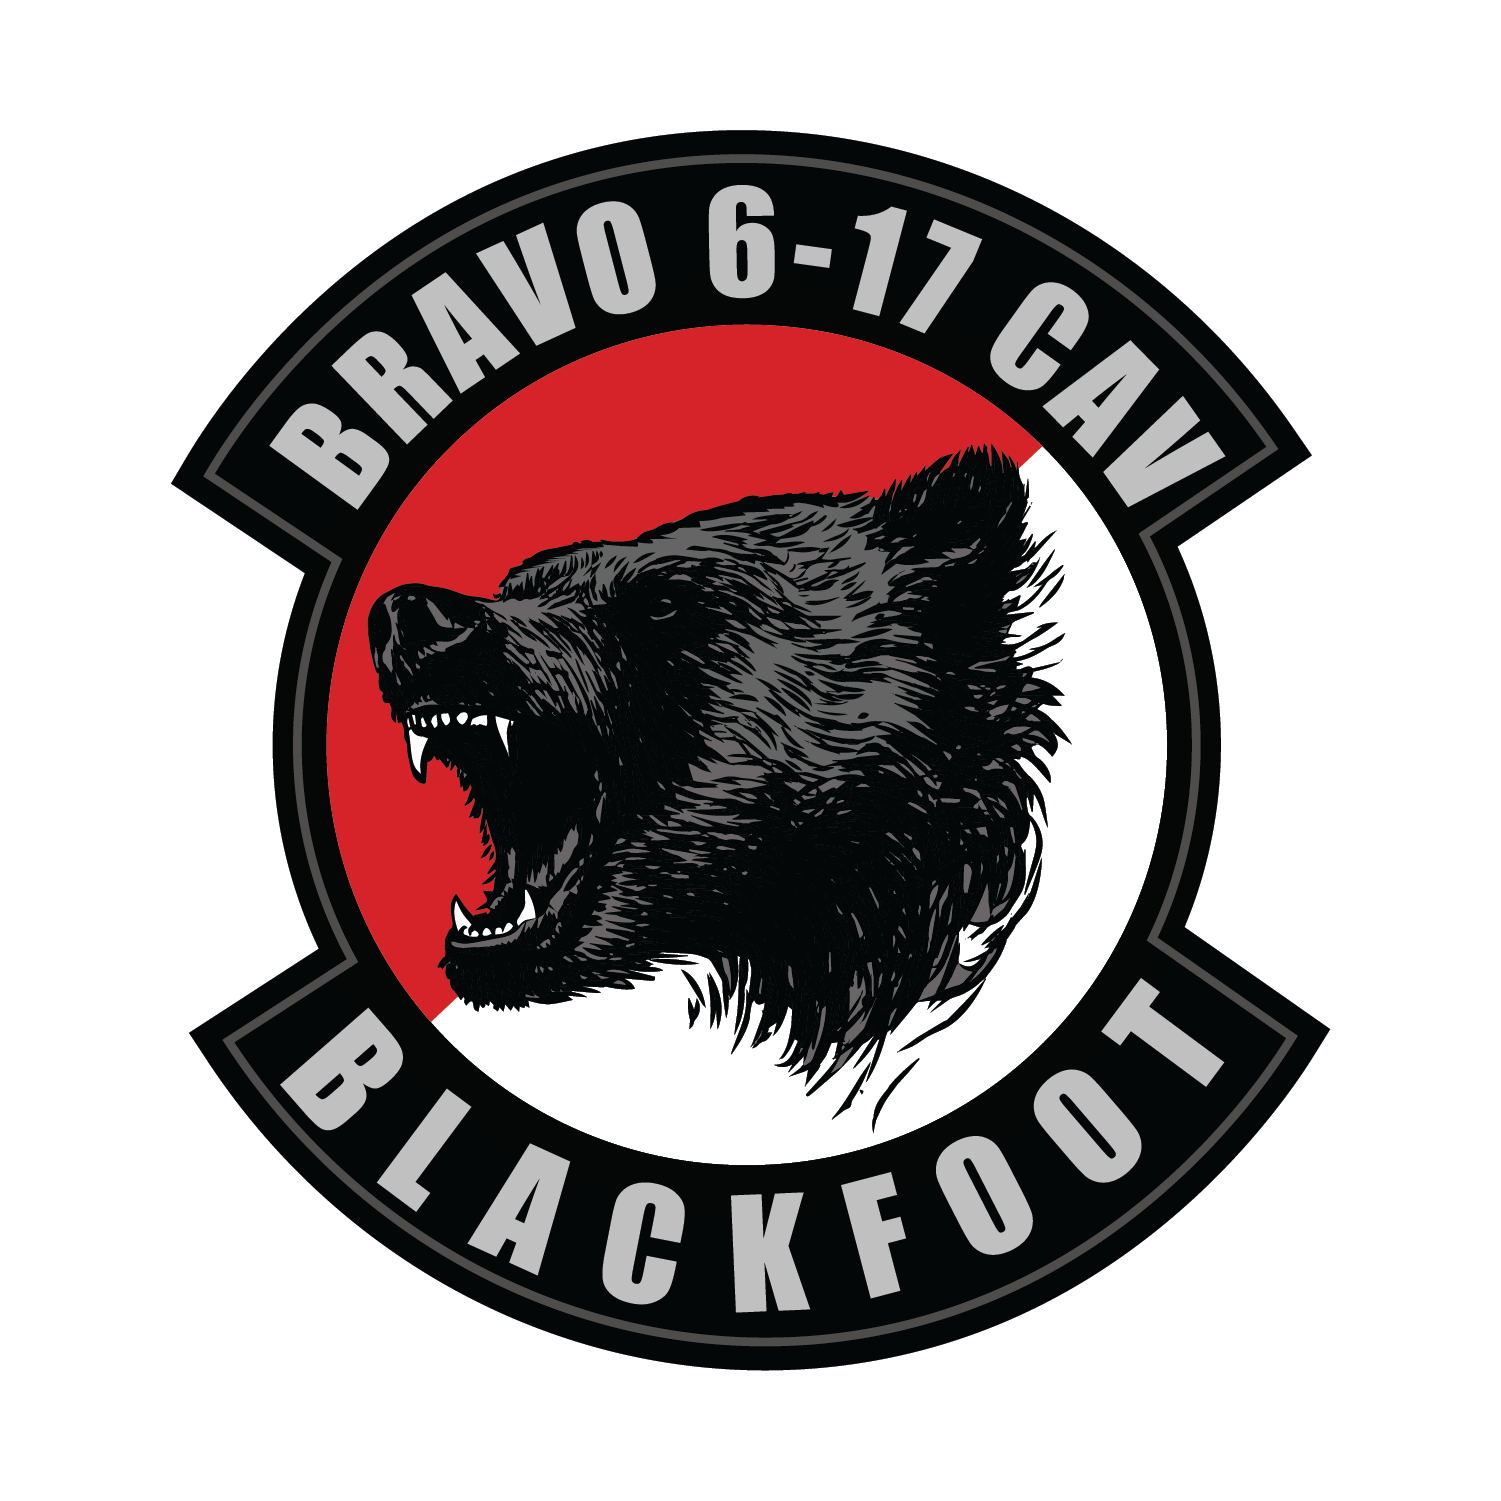 B Troop, 6-17 ACS "Blackfoot"